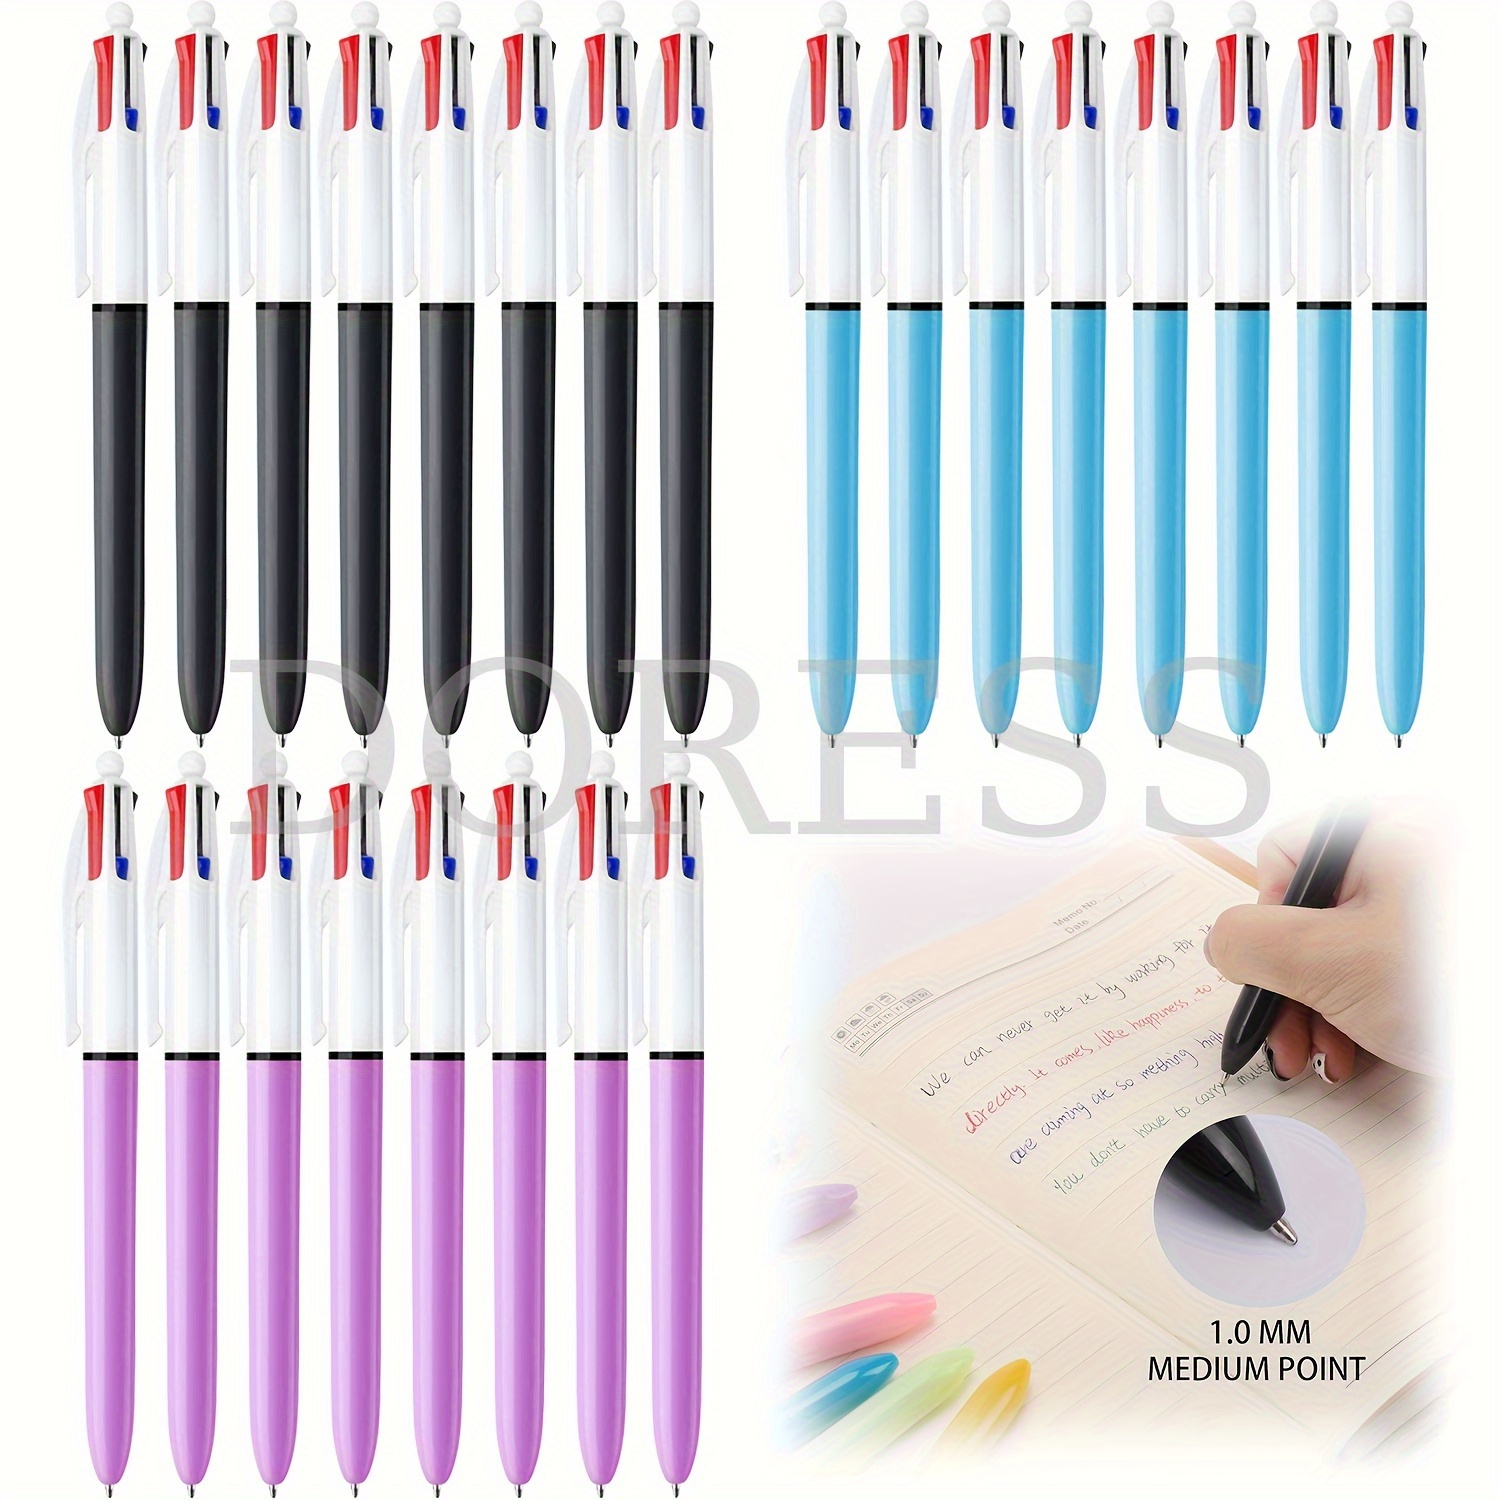 

Doress 8-pack Multicolor Ballpoint Pens, 1.0mm Fine Point, Retractable 4-in-1 Colored Pen Set For School, Nurses & Office - Ergonomic Design Ballpoint Pens For Writing Cute Pen Holder For Desk